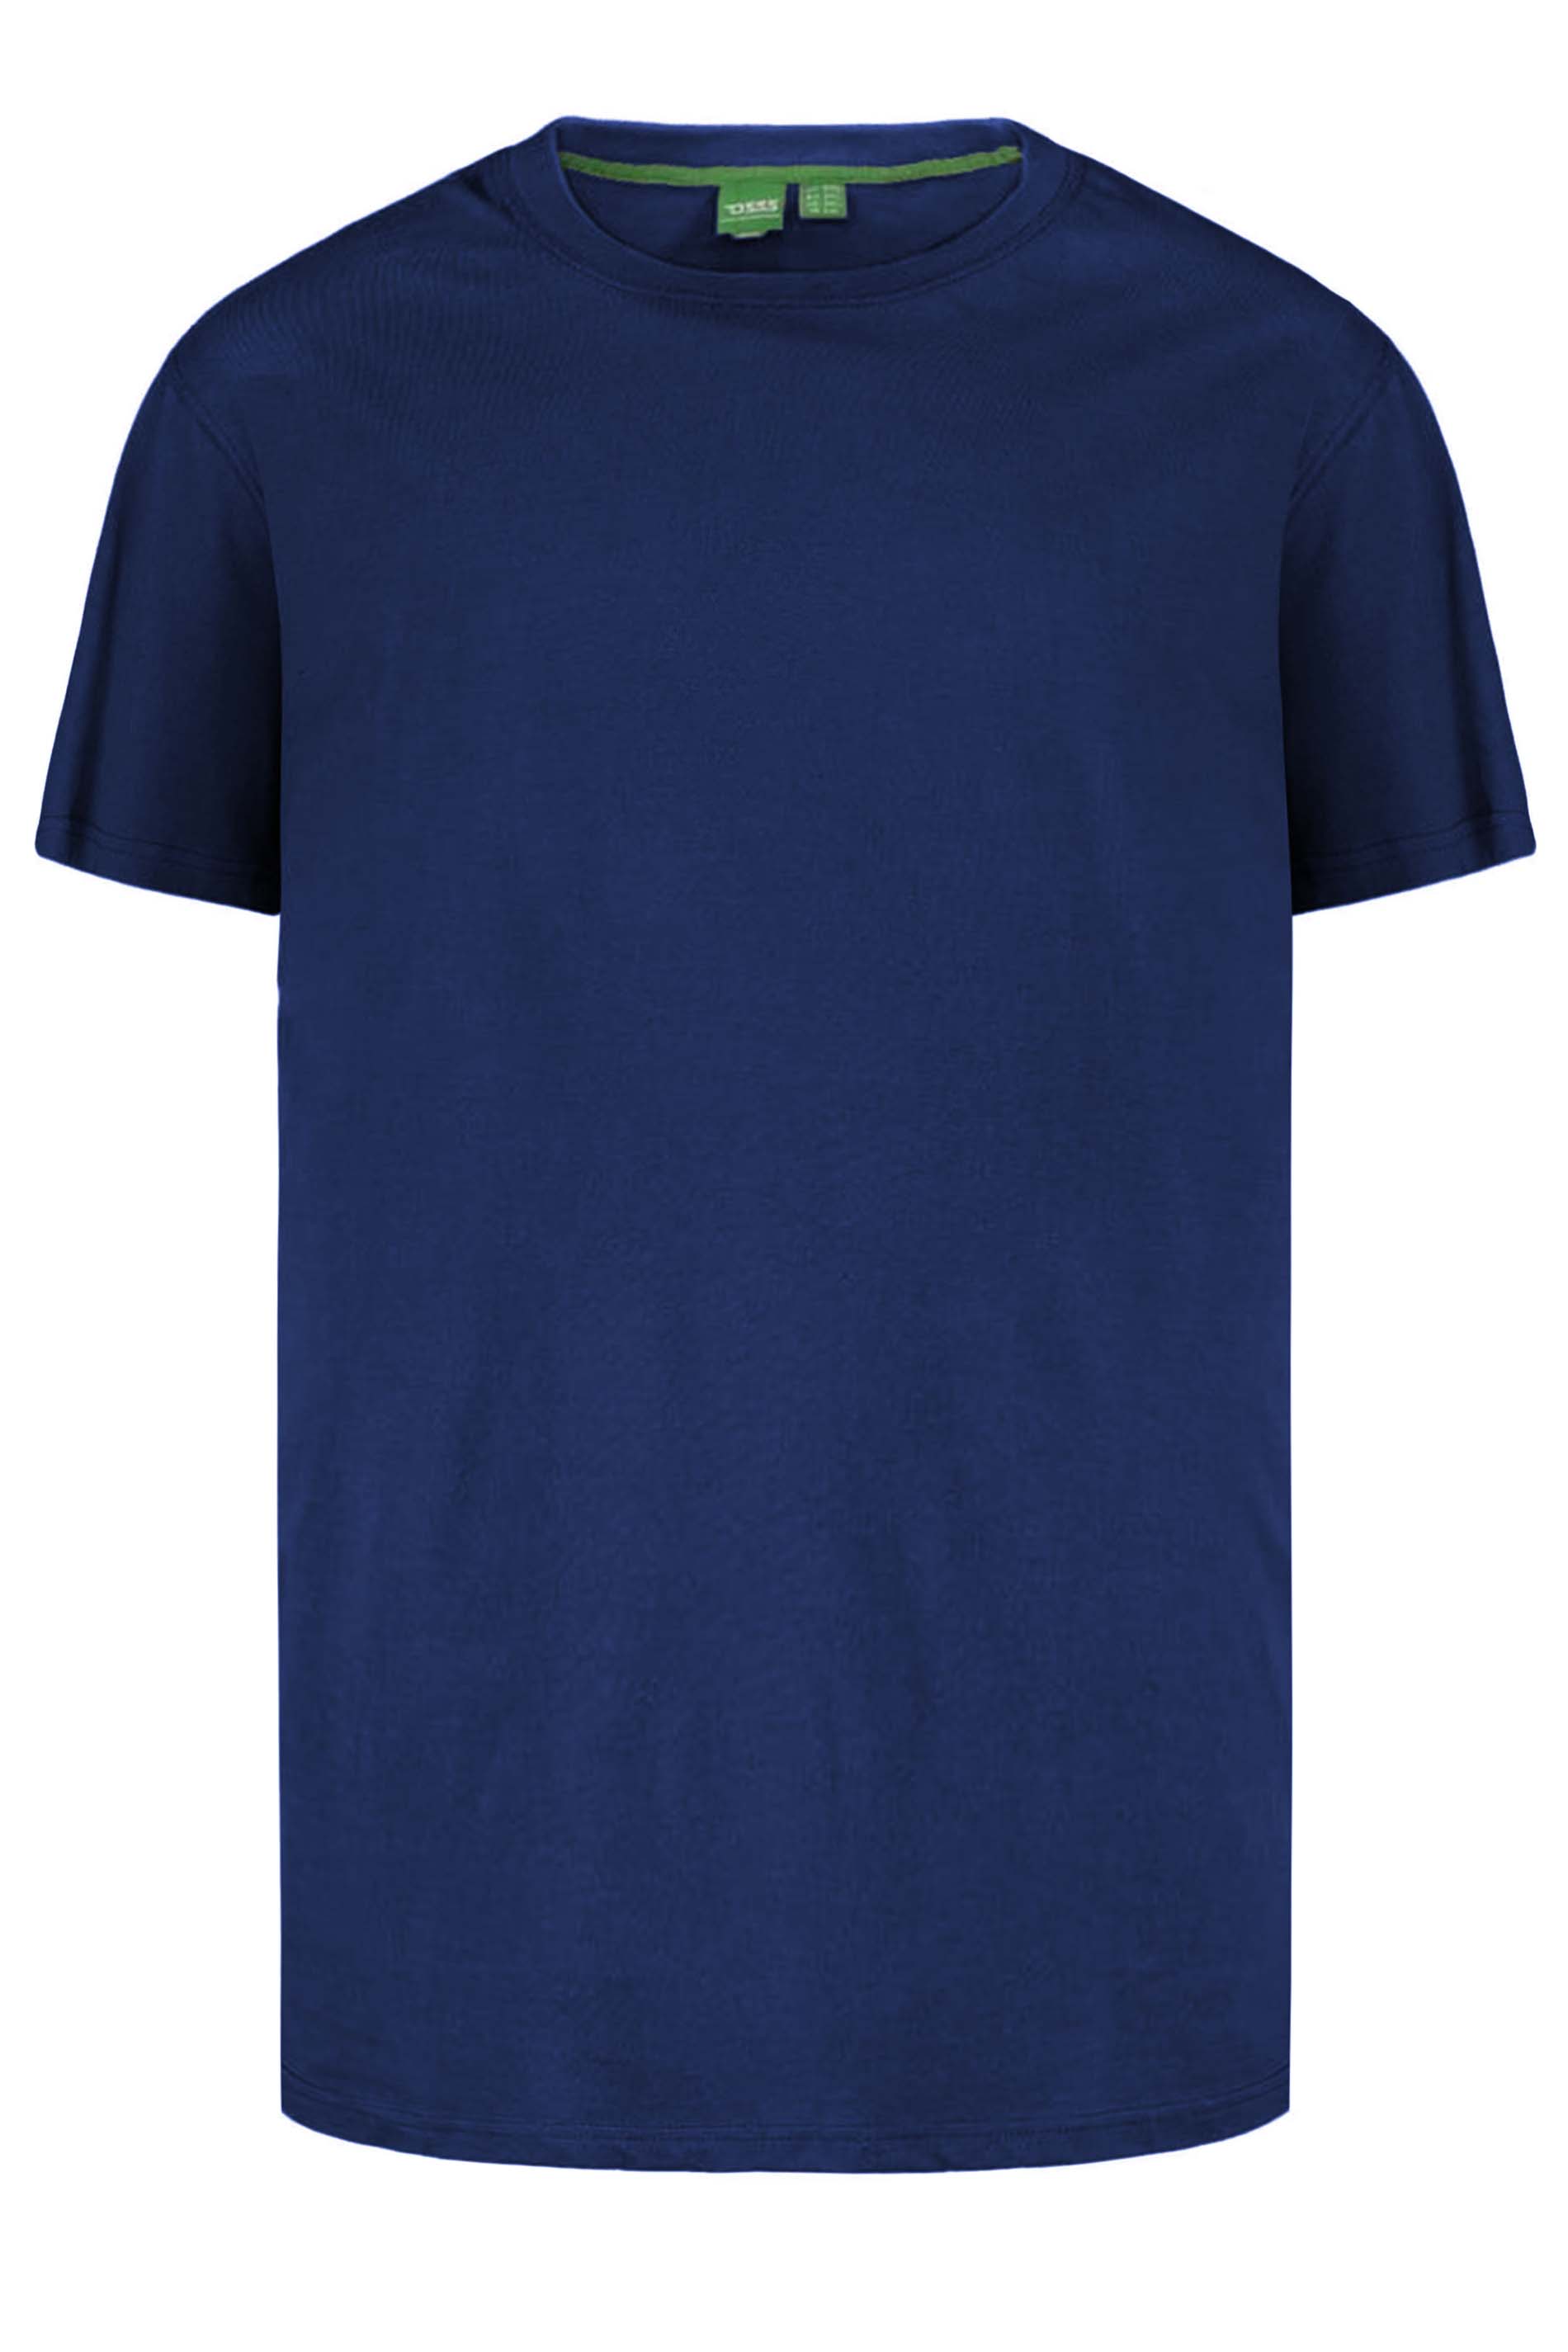 D555 Navy Blue Duke Basic T-Shirt | BadRhino 2